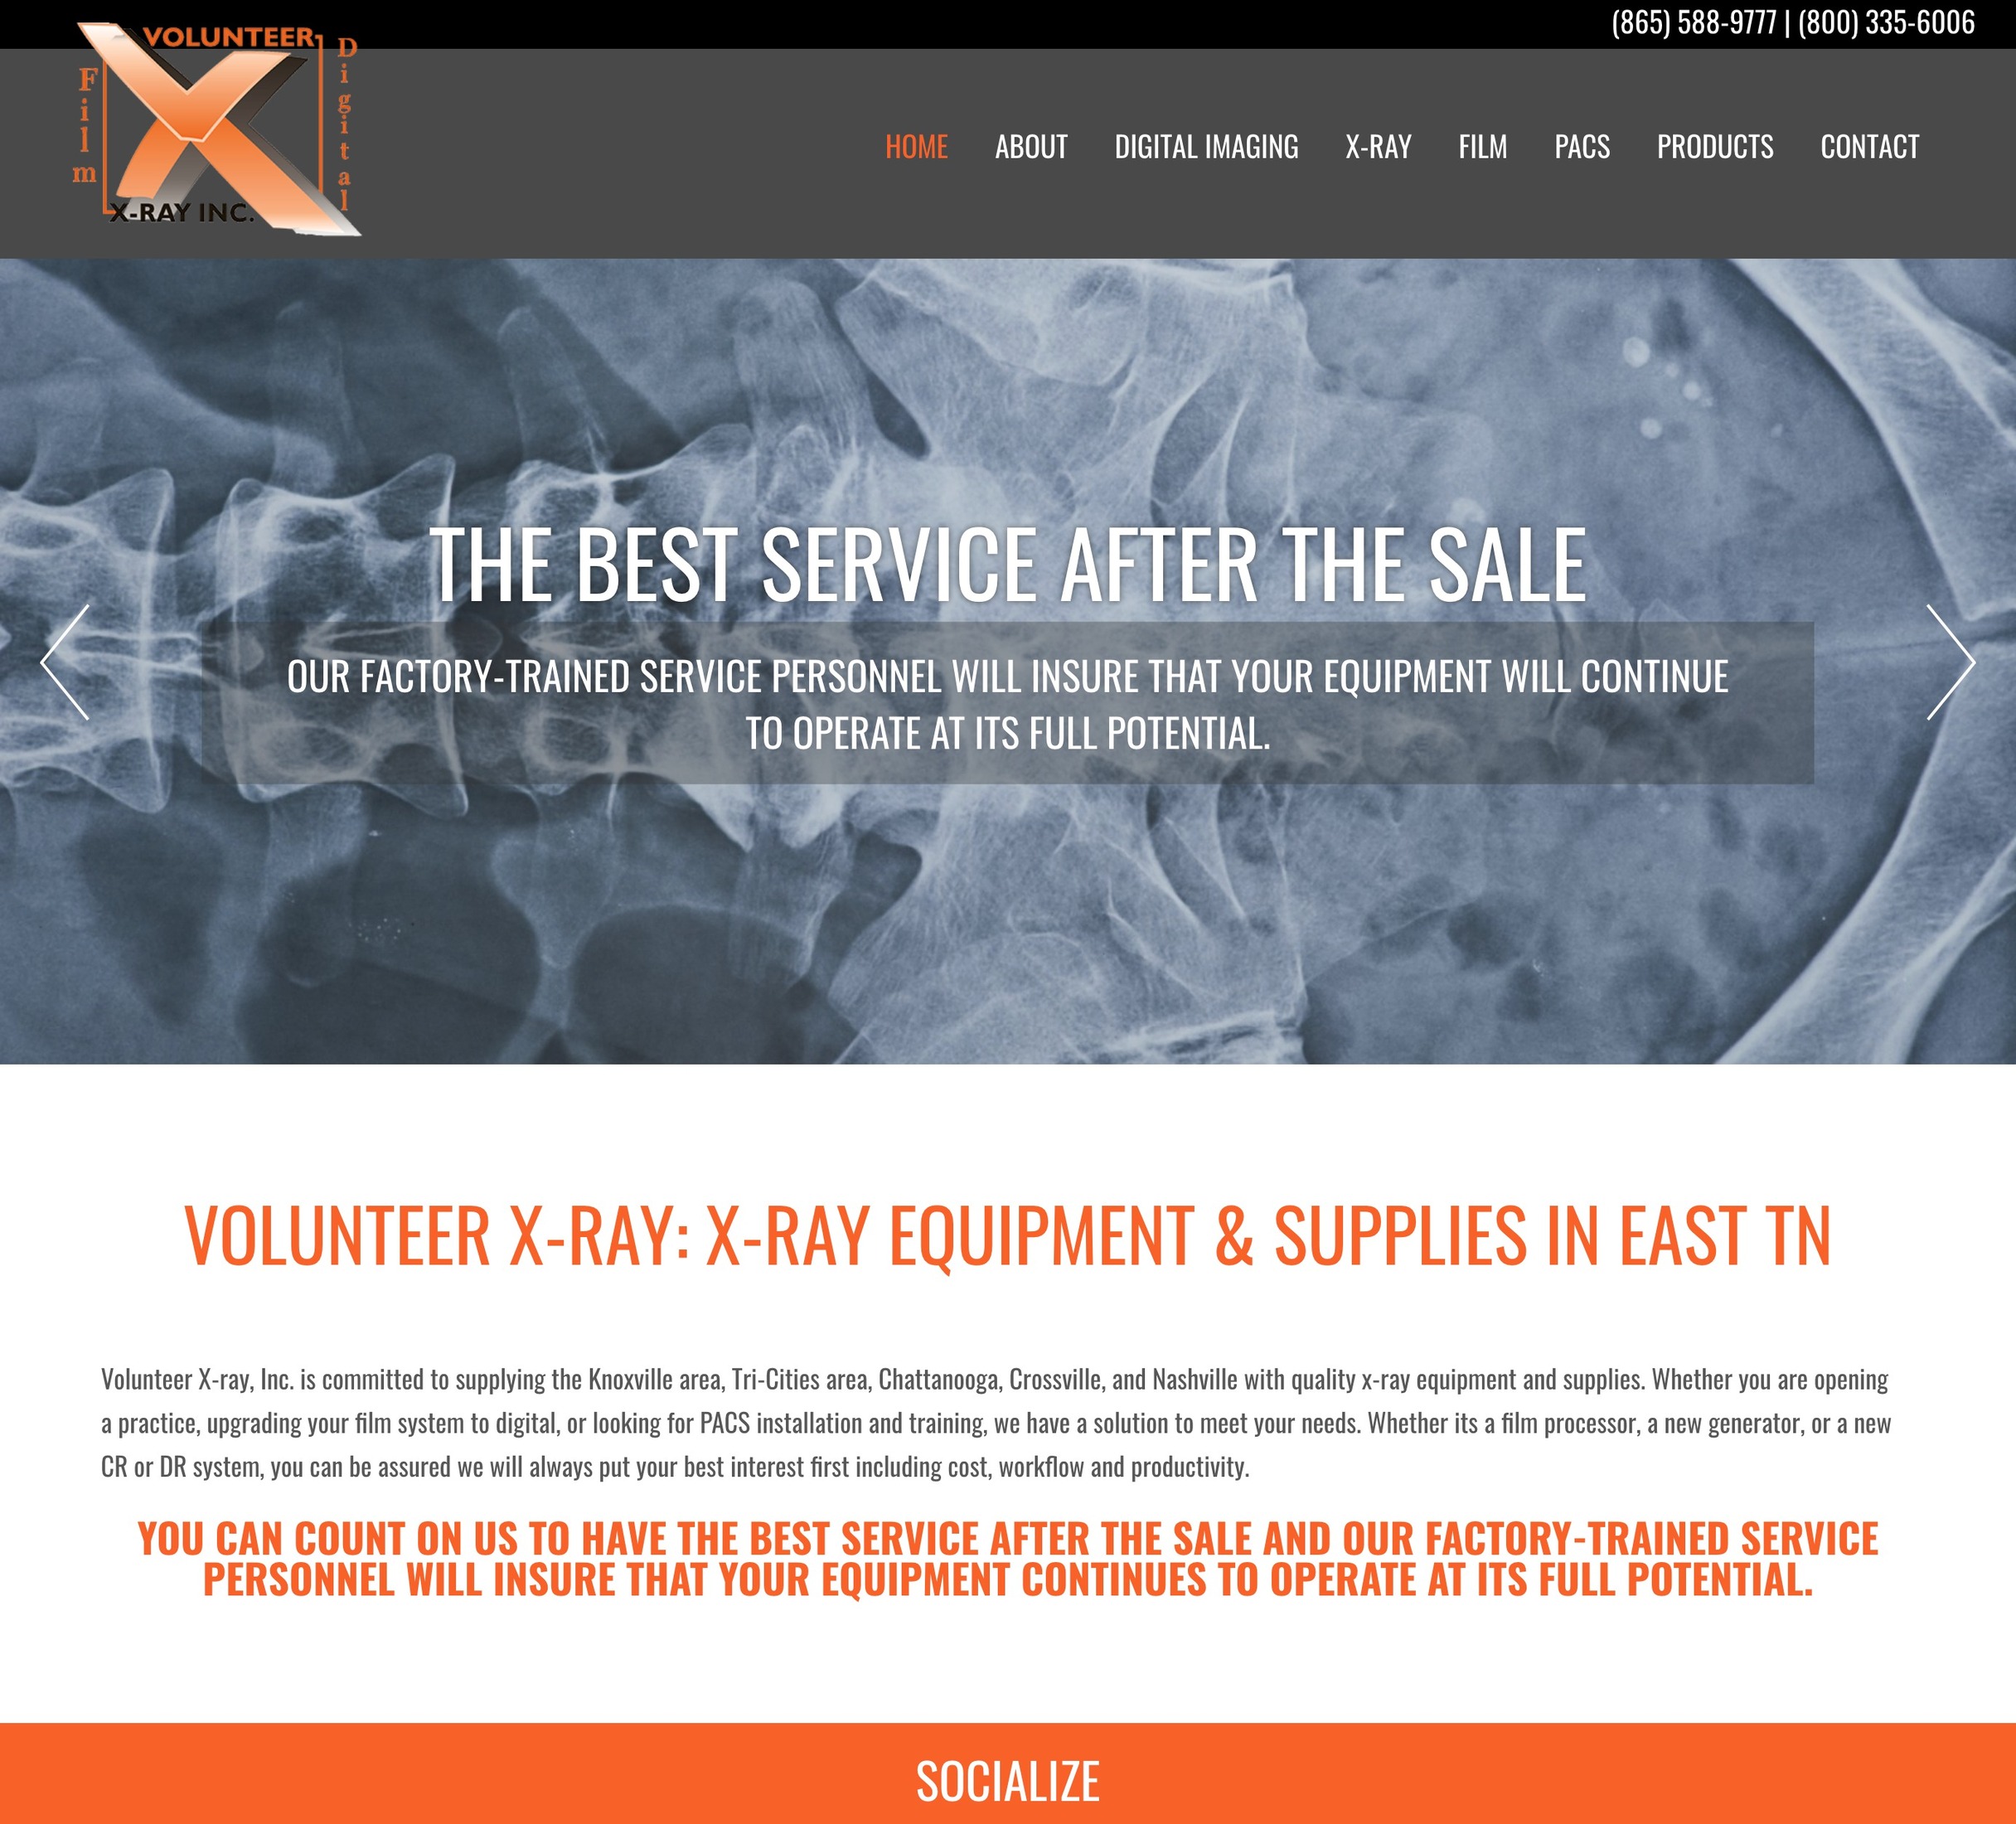 Volunteer X-ray